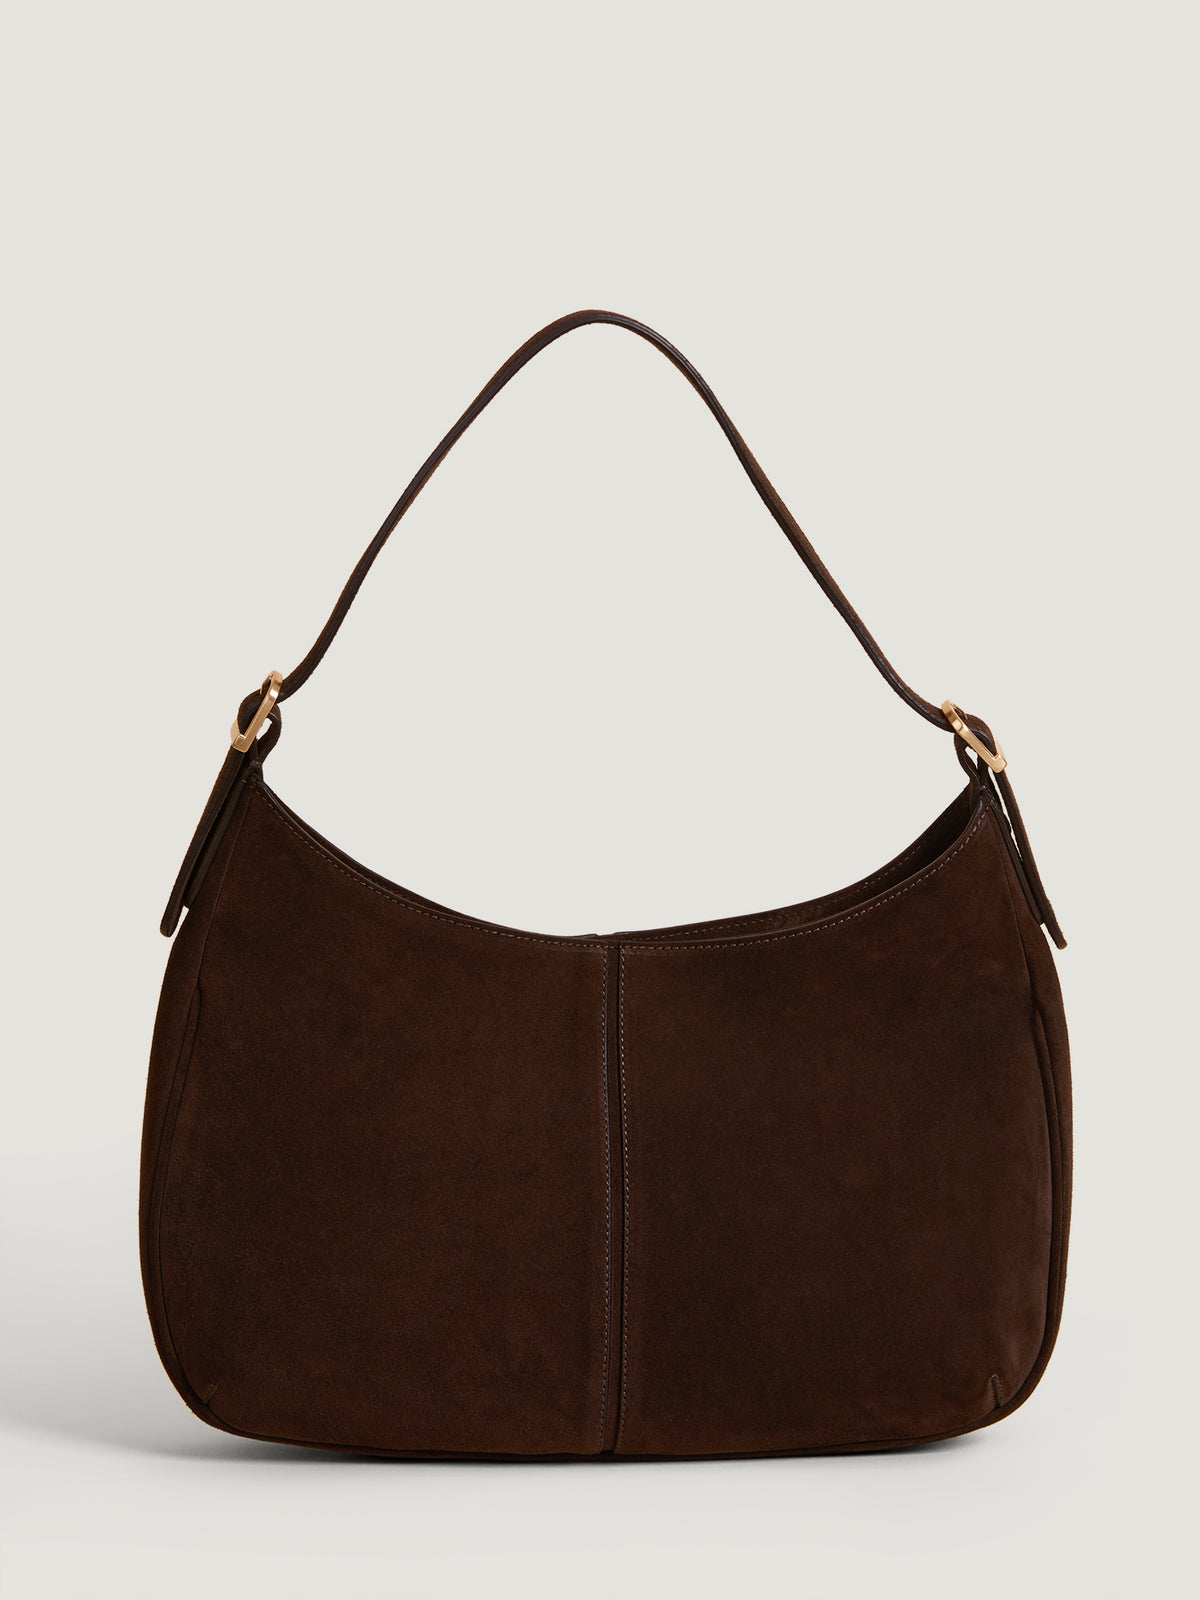 Buy S-ZONE Women Soft Genuine Leather Handbag Large Capacity Shoulder Hobo  Bag at Amazon.in